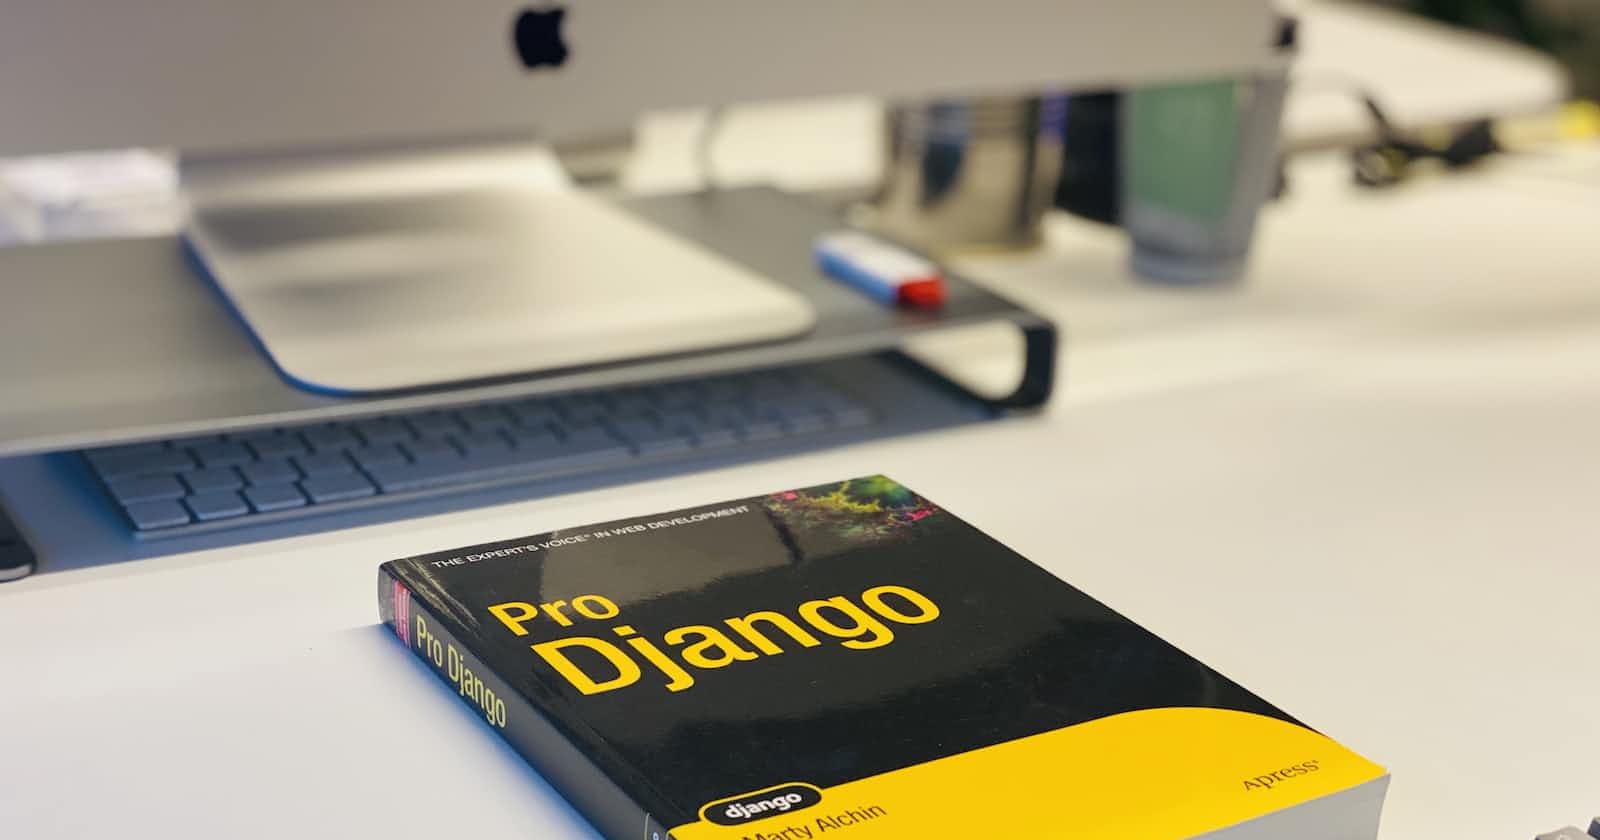 First Django Project - Hello World